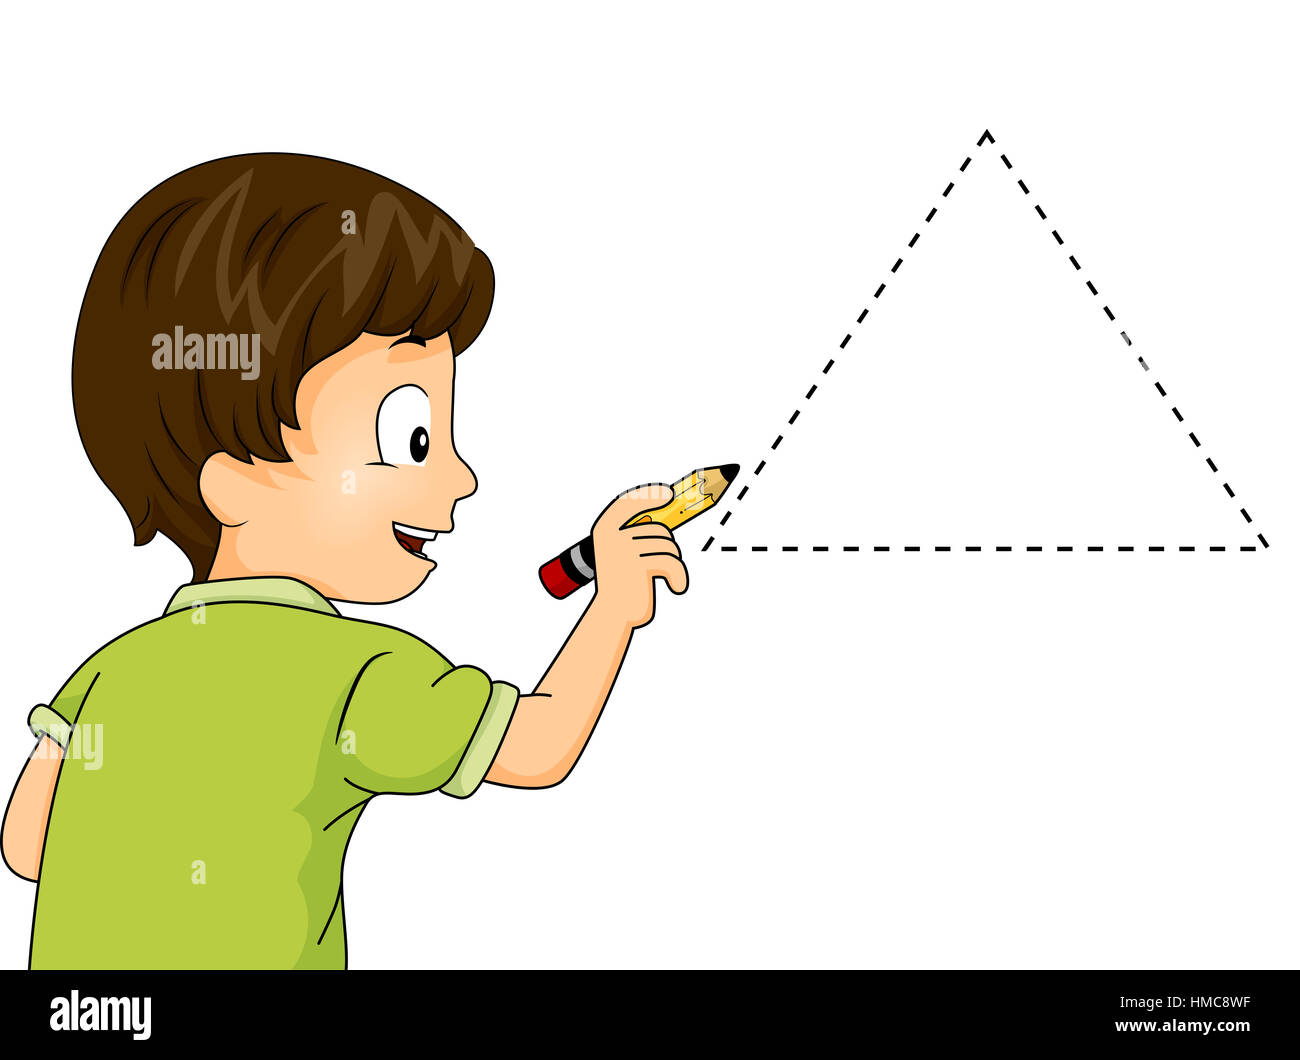 https://c8.alamy.com/comp/HMC8WF/illustration-of-a-little-boy-drawing-a-triangle-HMC8WF.jpg